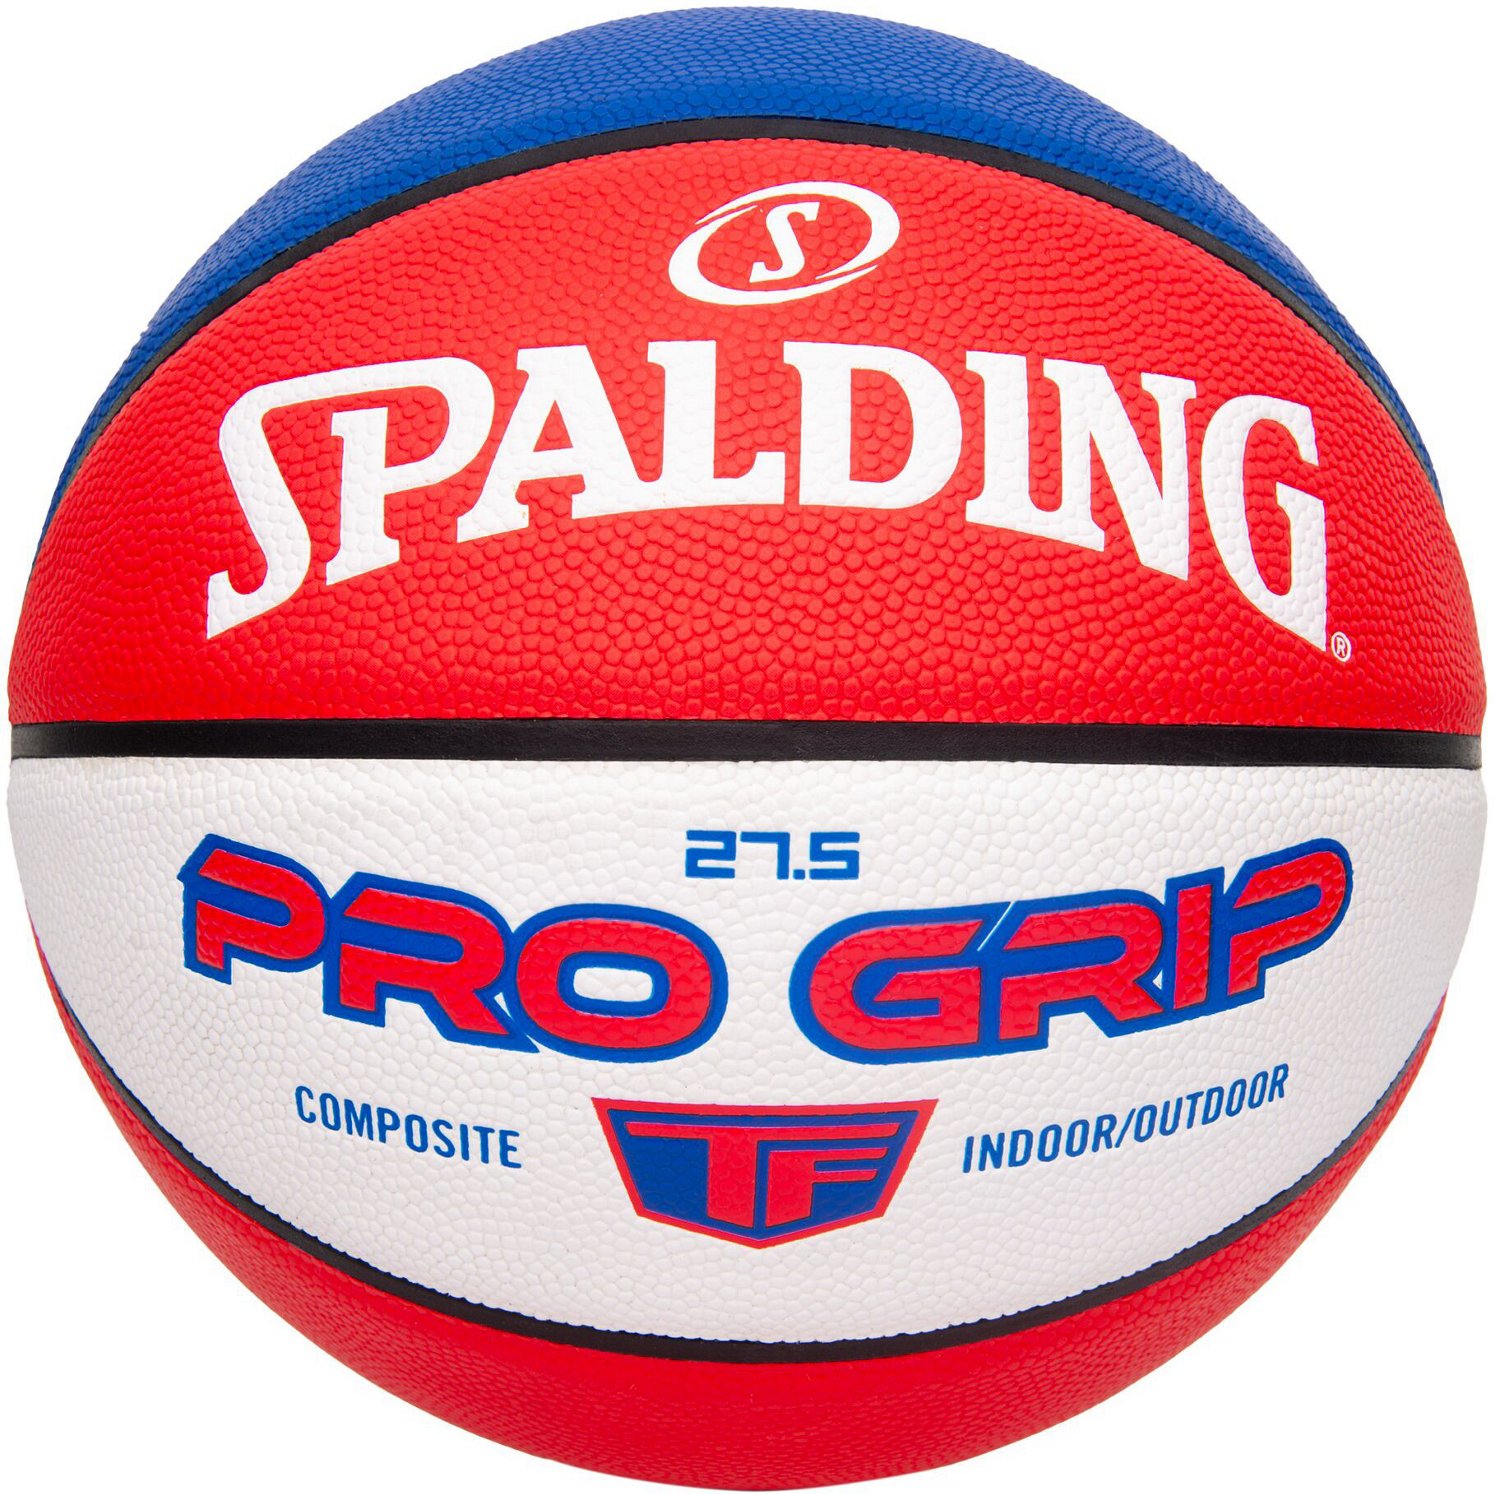 Spalding Pro Grip All Court Basketball